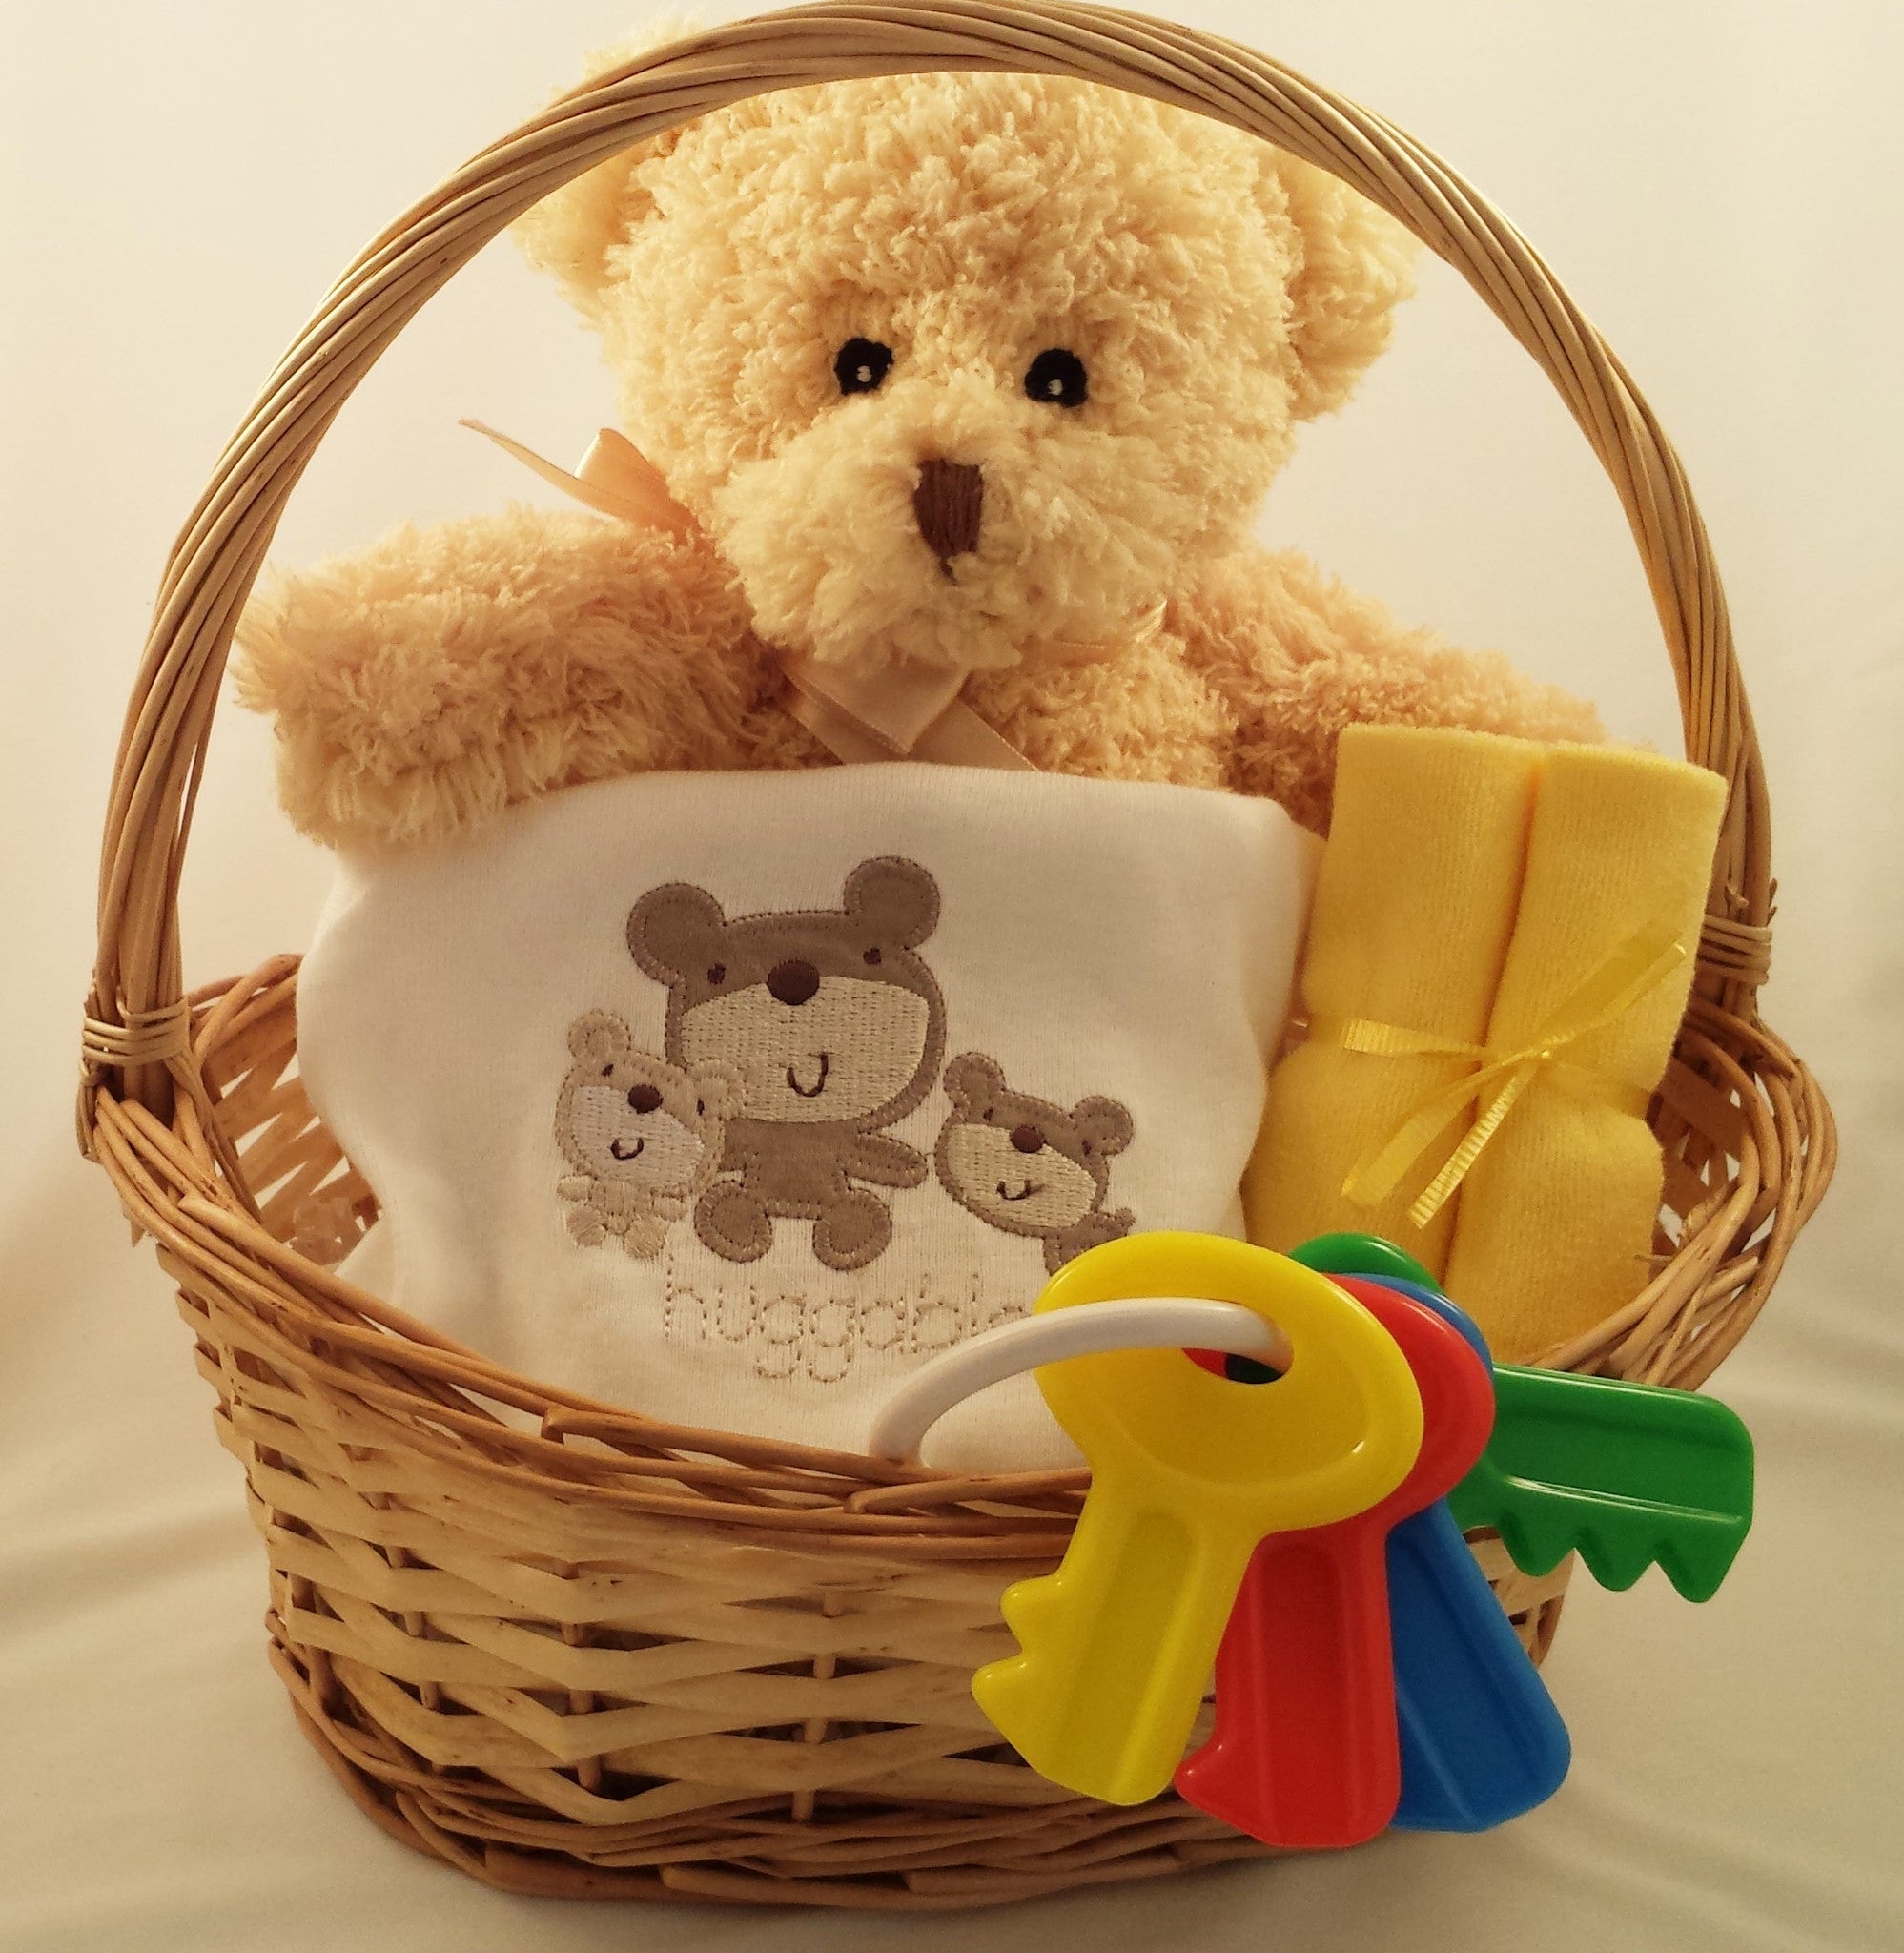 teddy bear gift